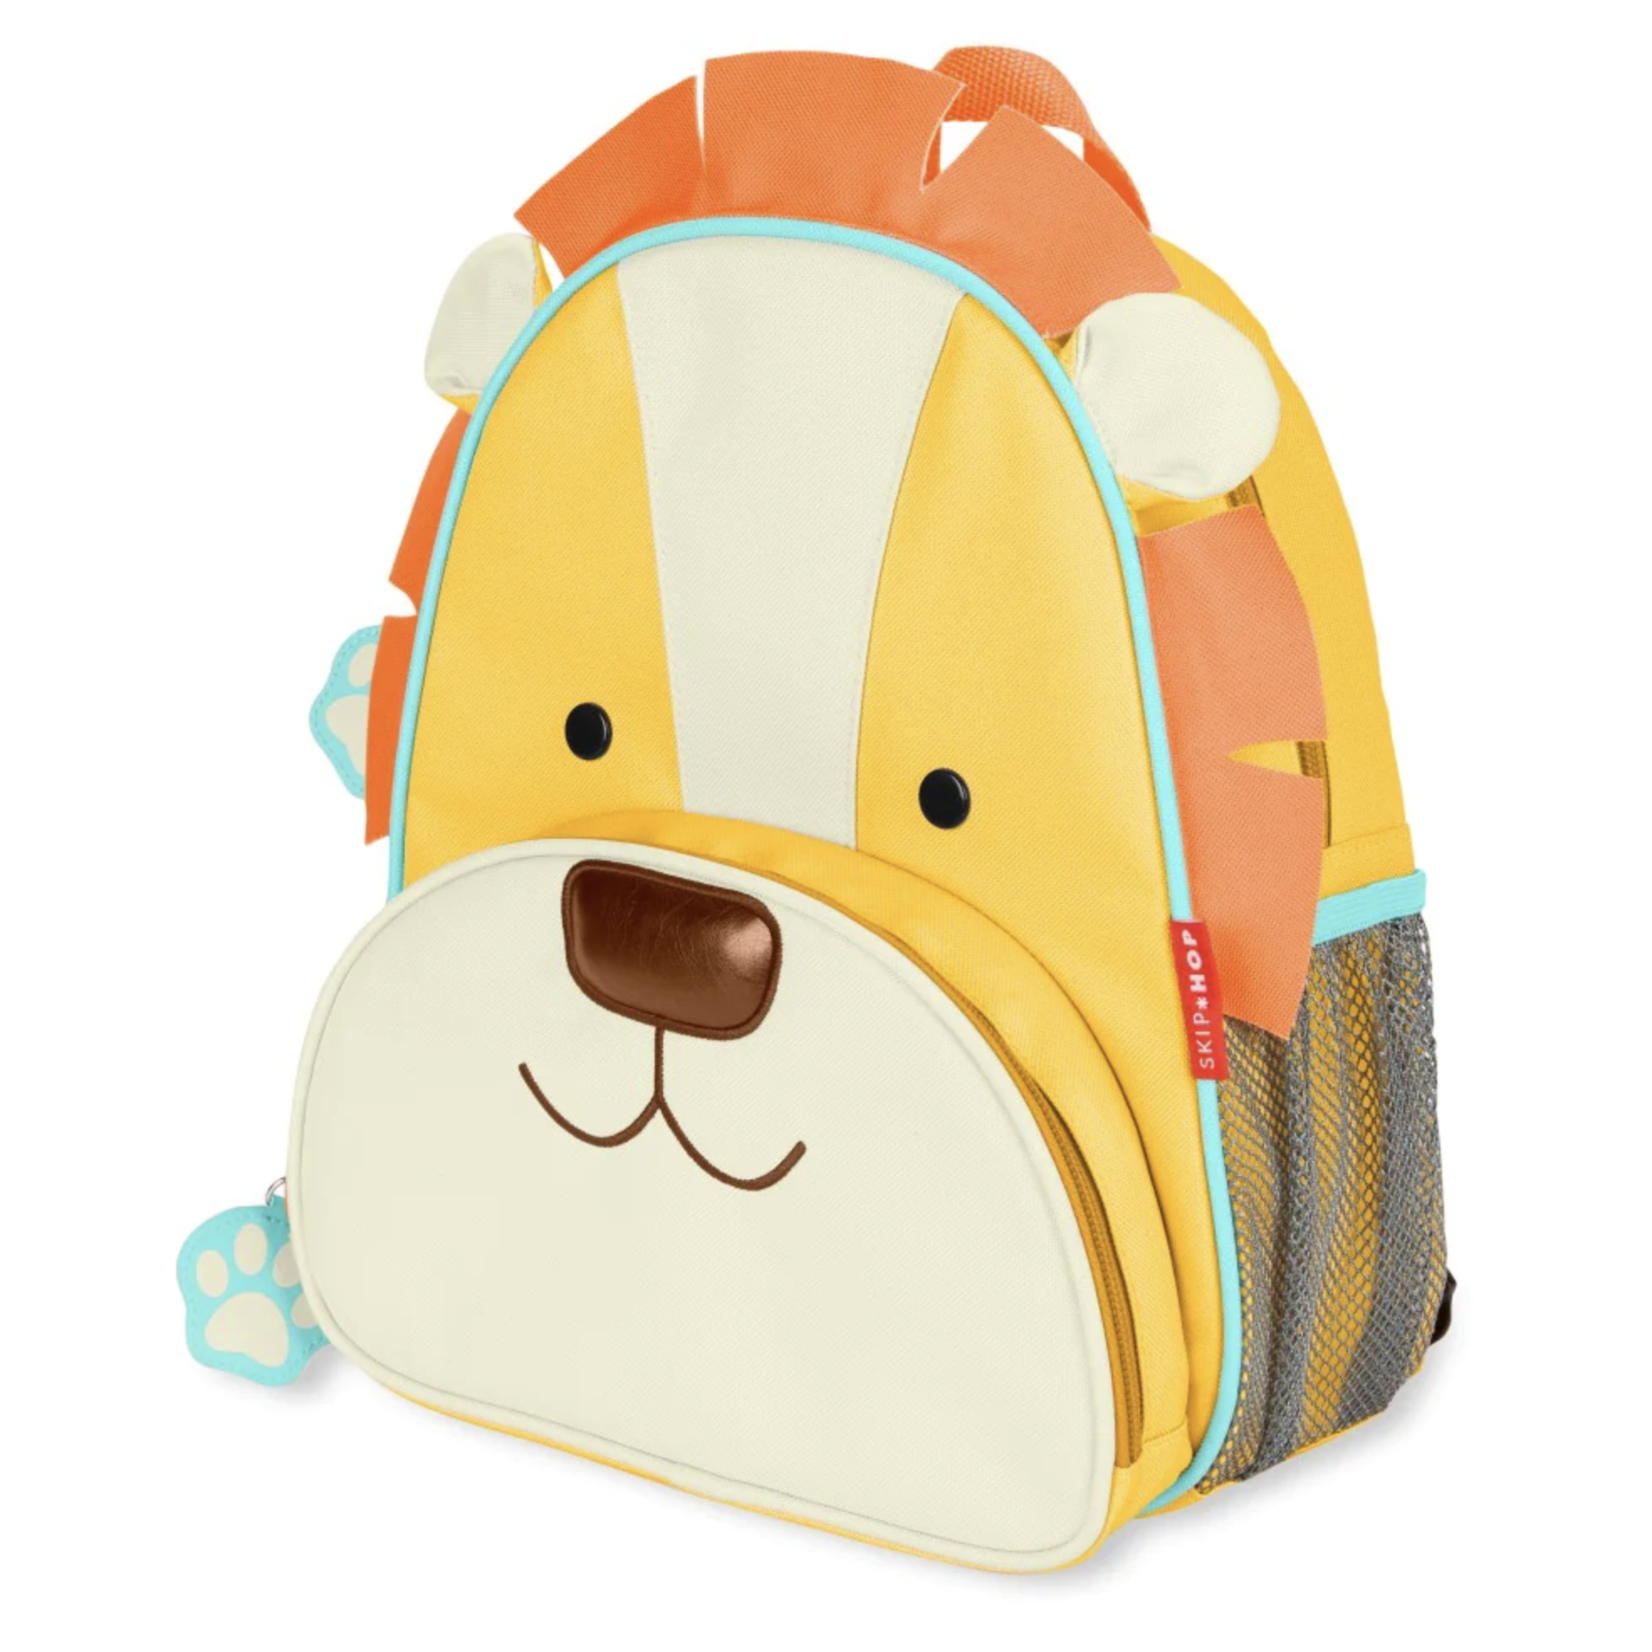 Skip Hop Zoo Little Kid Backpack - Lion